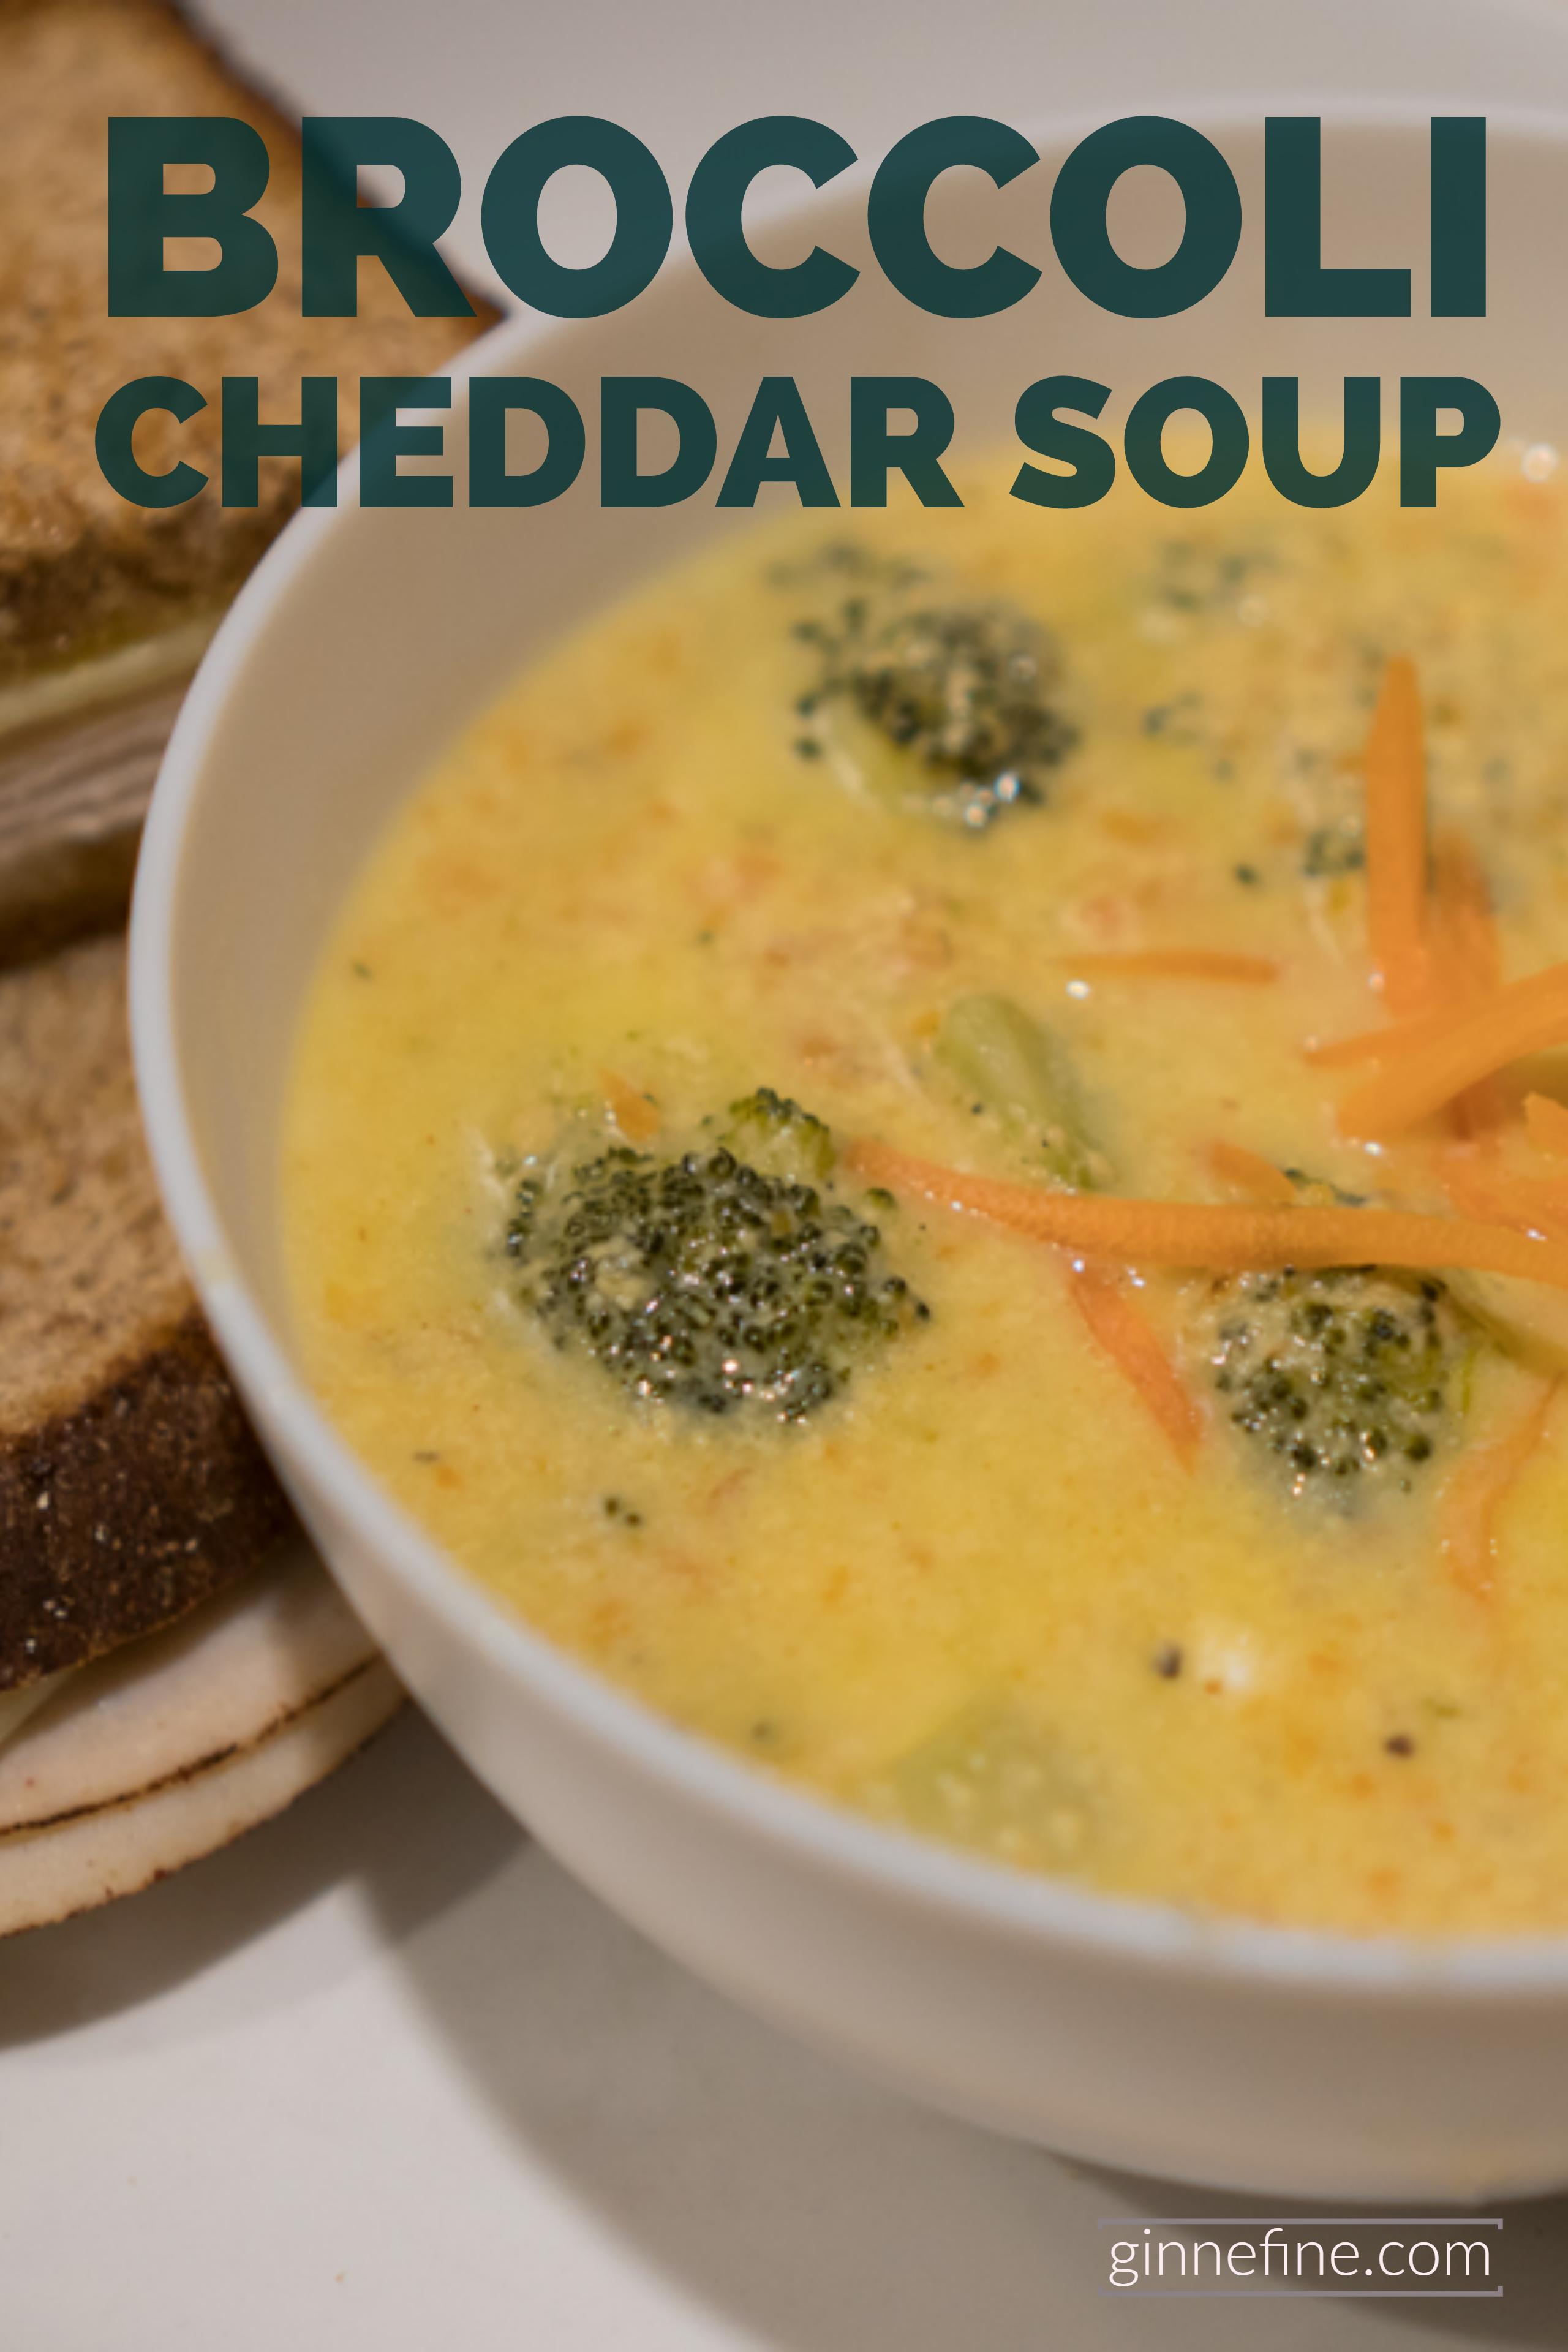 Broccoli Cheddar Soup - Ginnefine | The Blog